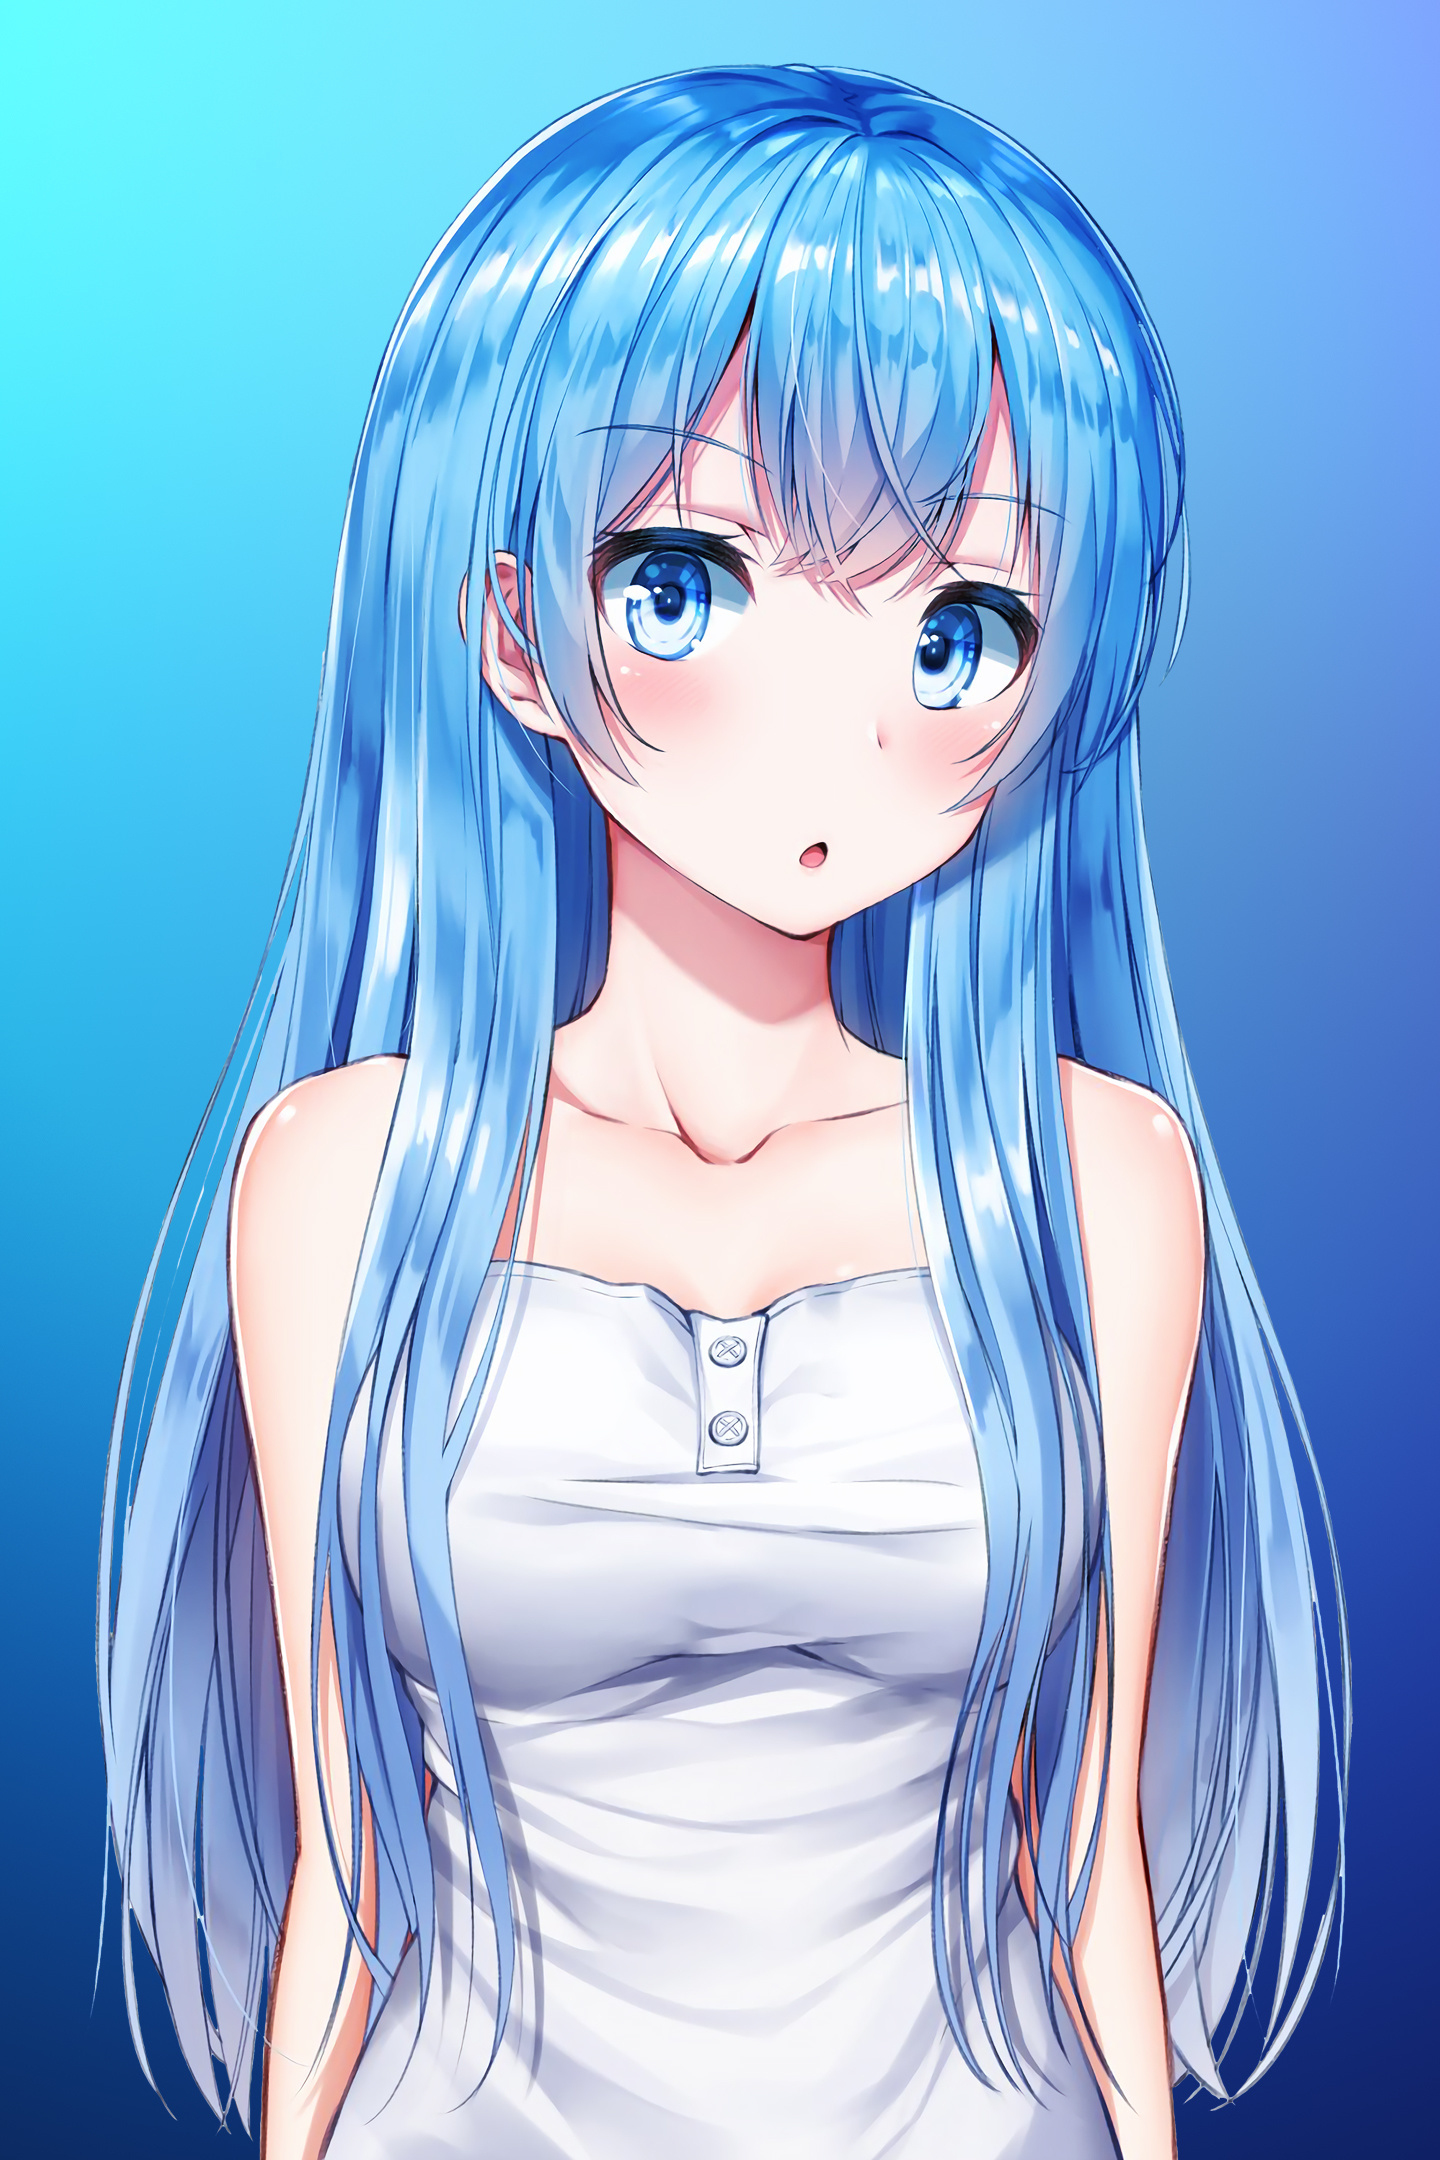 Download 1440x2630 Wallpaper Blue Hair Anime Girl Cute Original